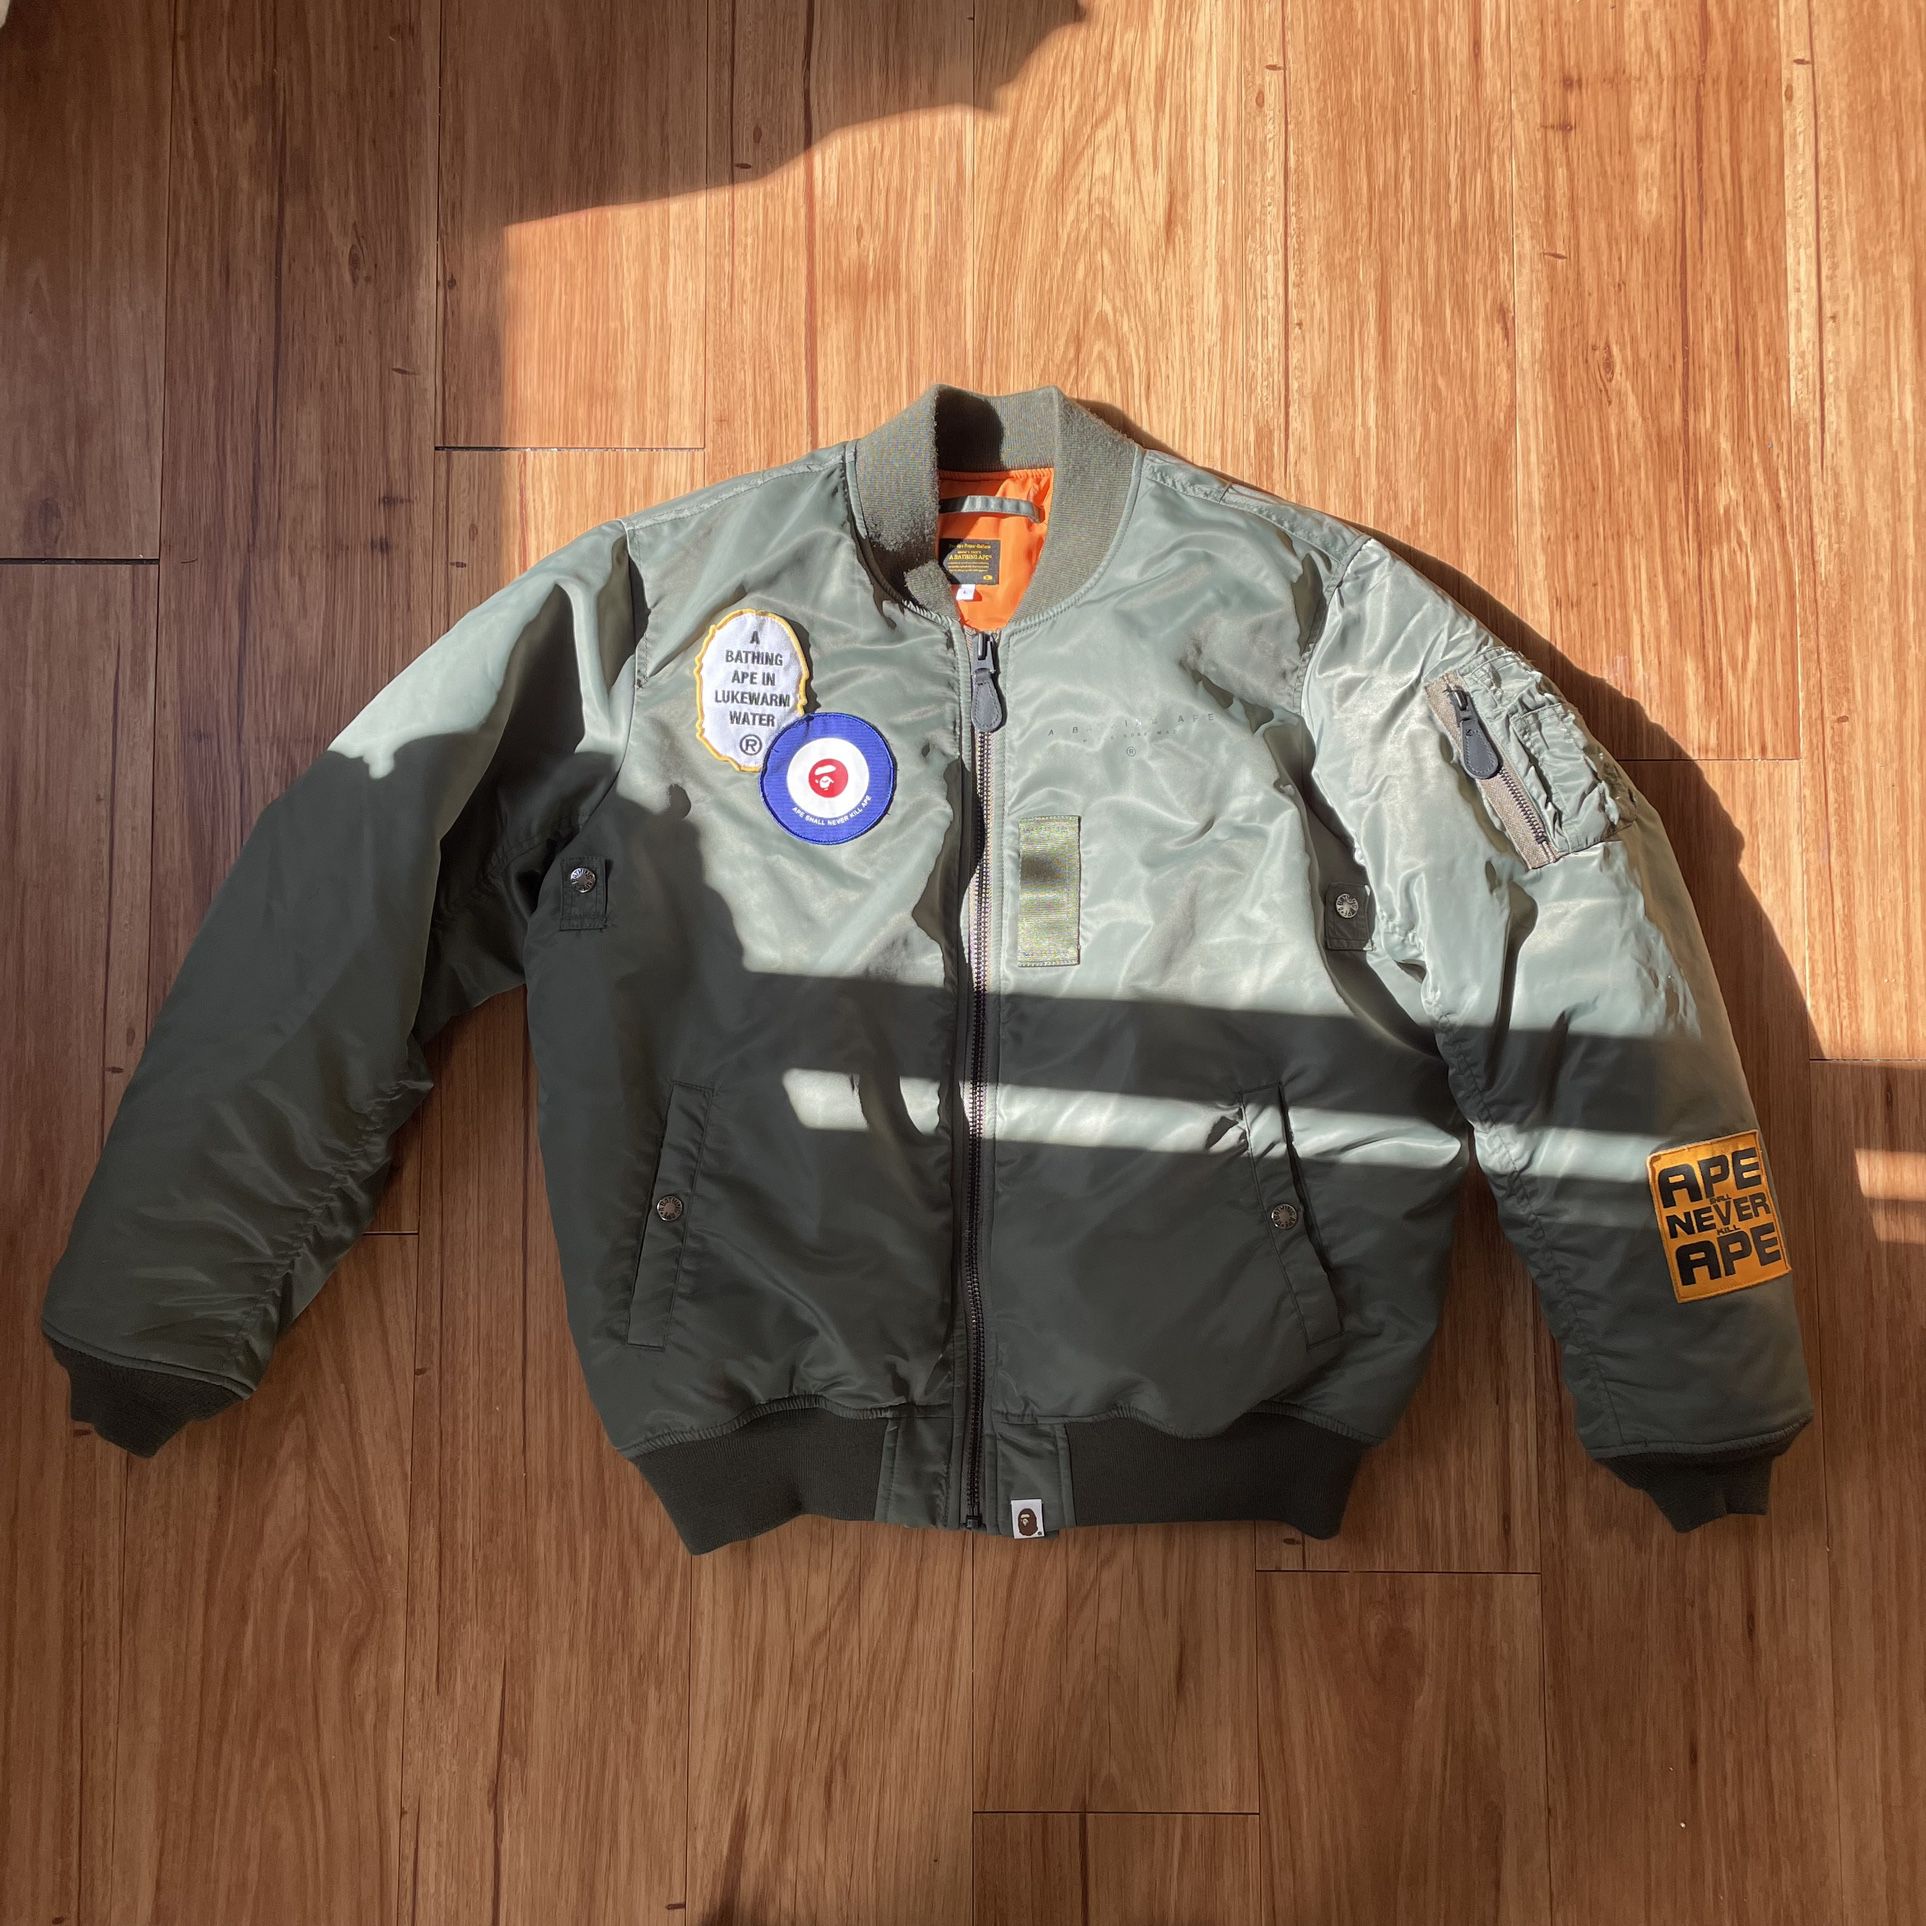 Authentic Bape dev-ops proper uniform bomber jacket